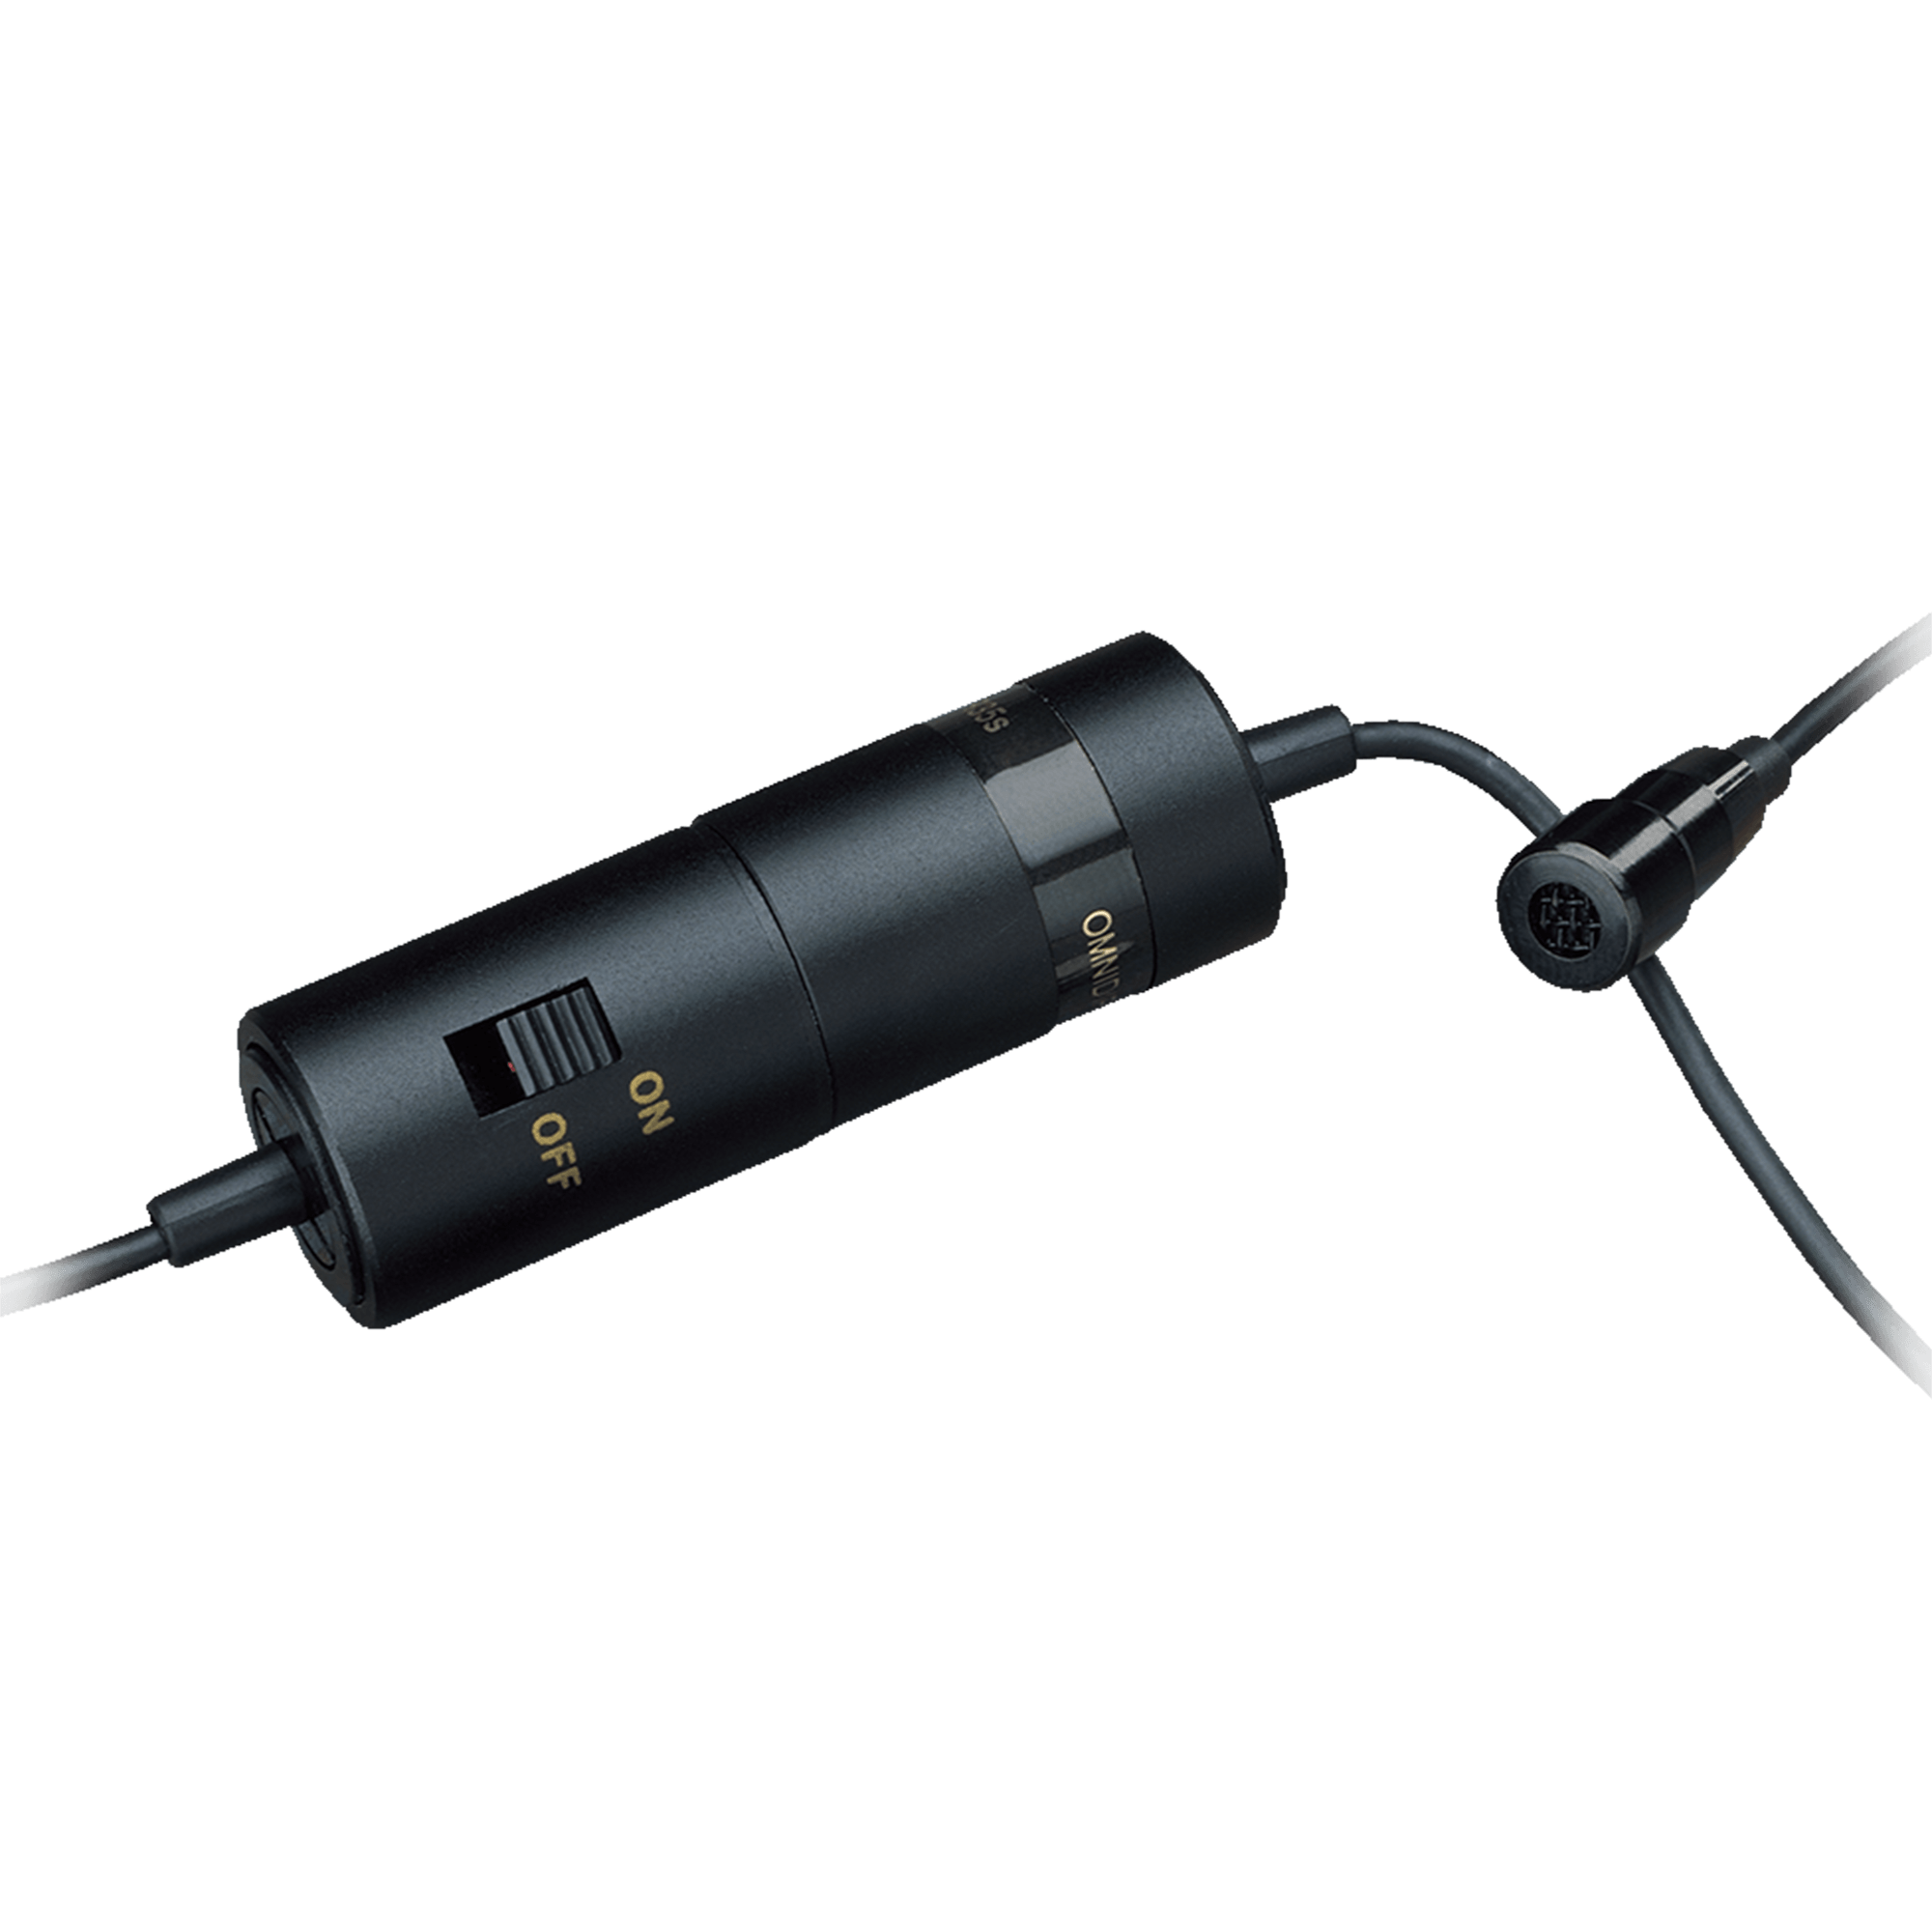 Solapa de micrófono de solapa micrófono de condensador omnidireccional P3B1 de cancelación de ruido